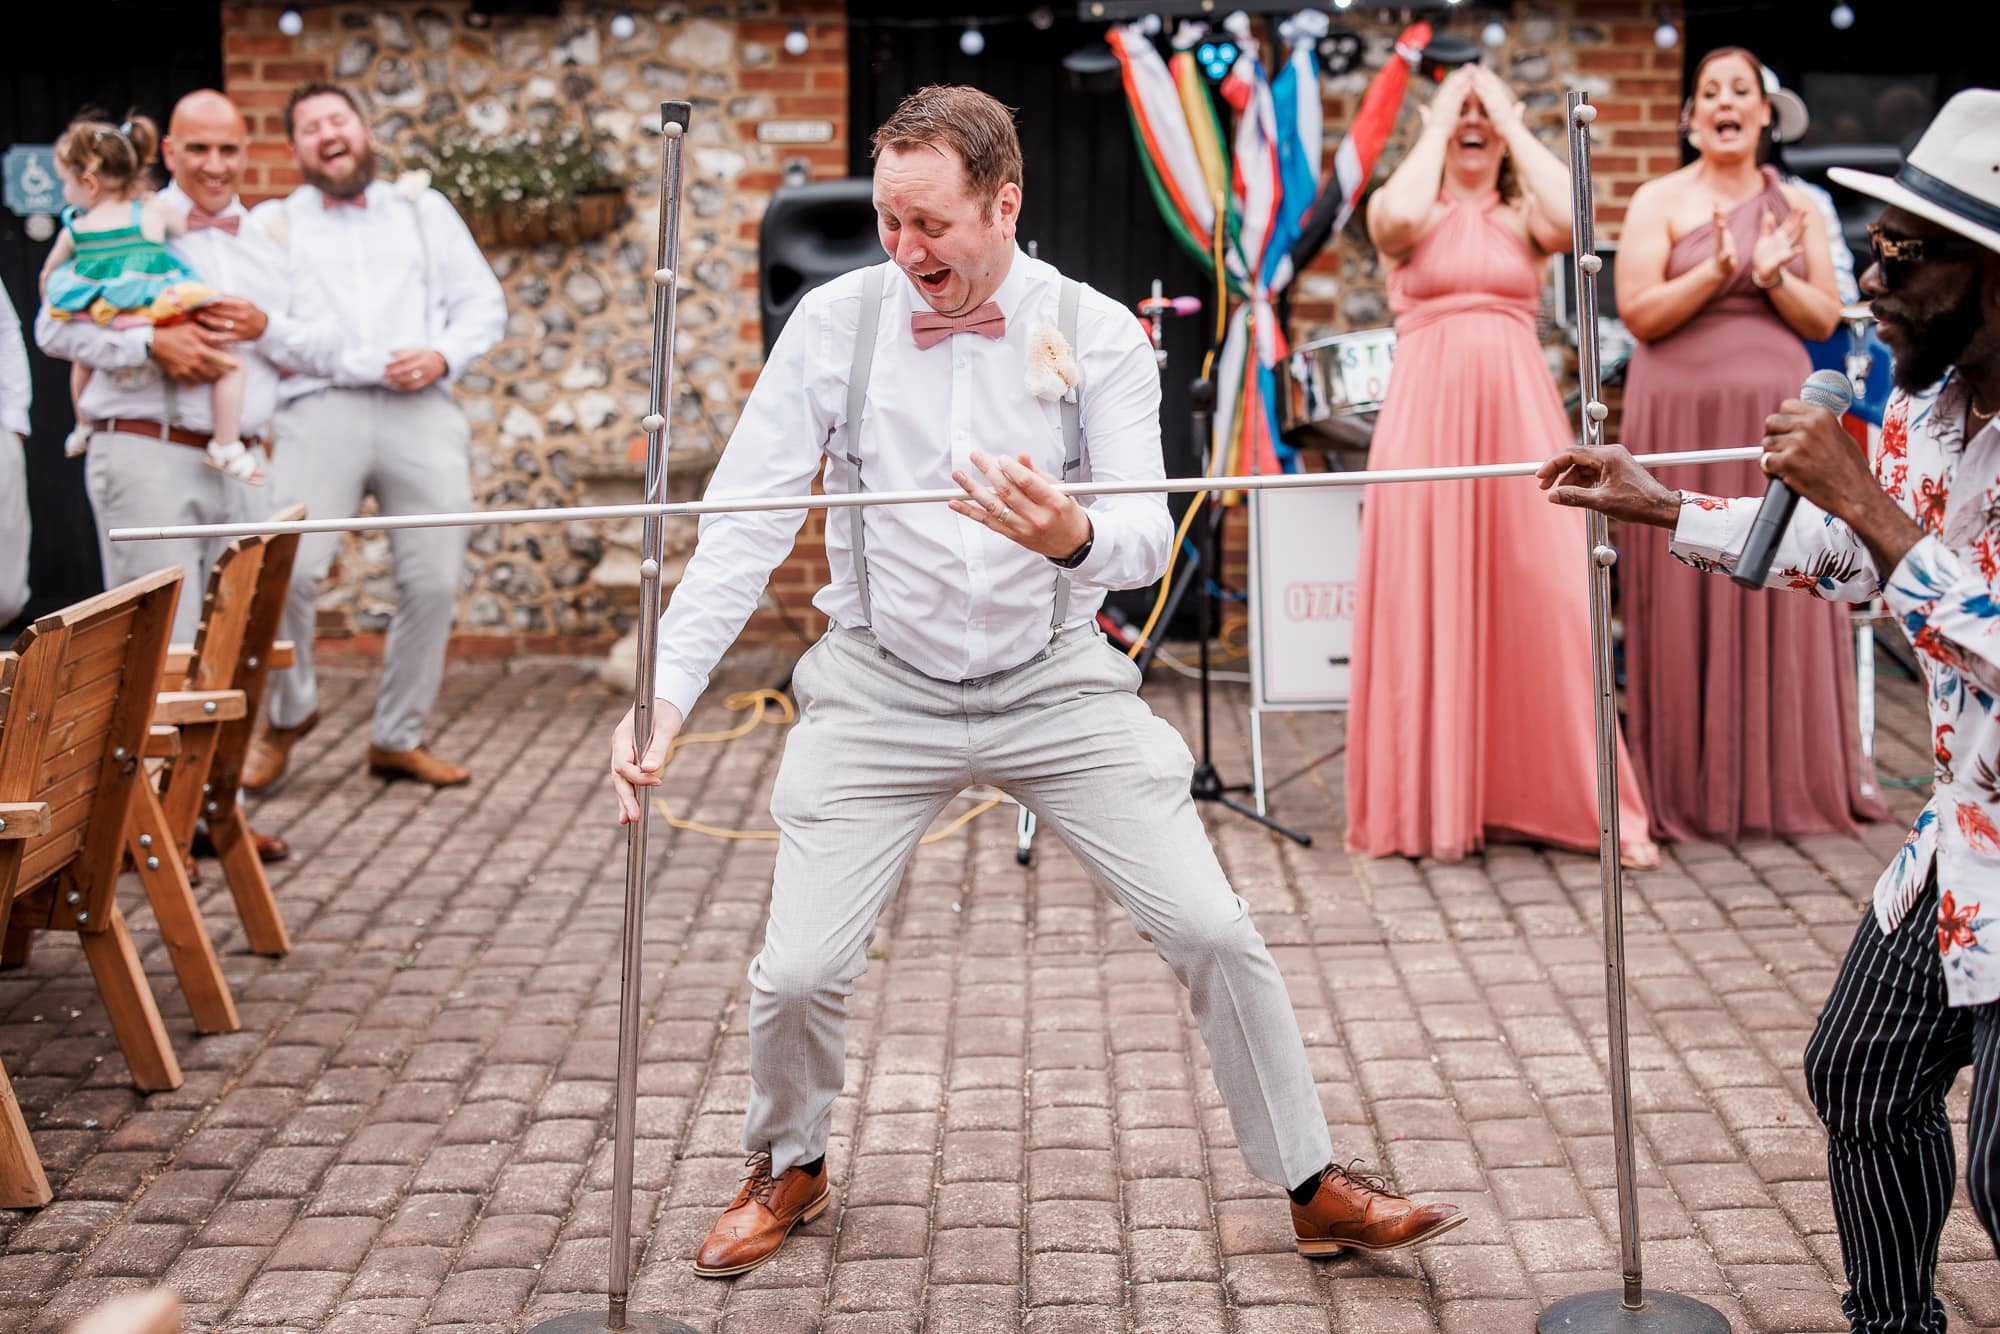 limbo dancing at wedding